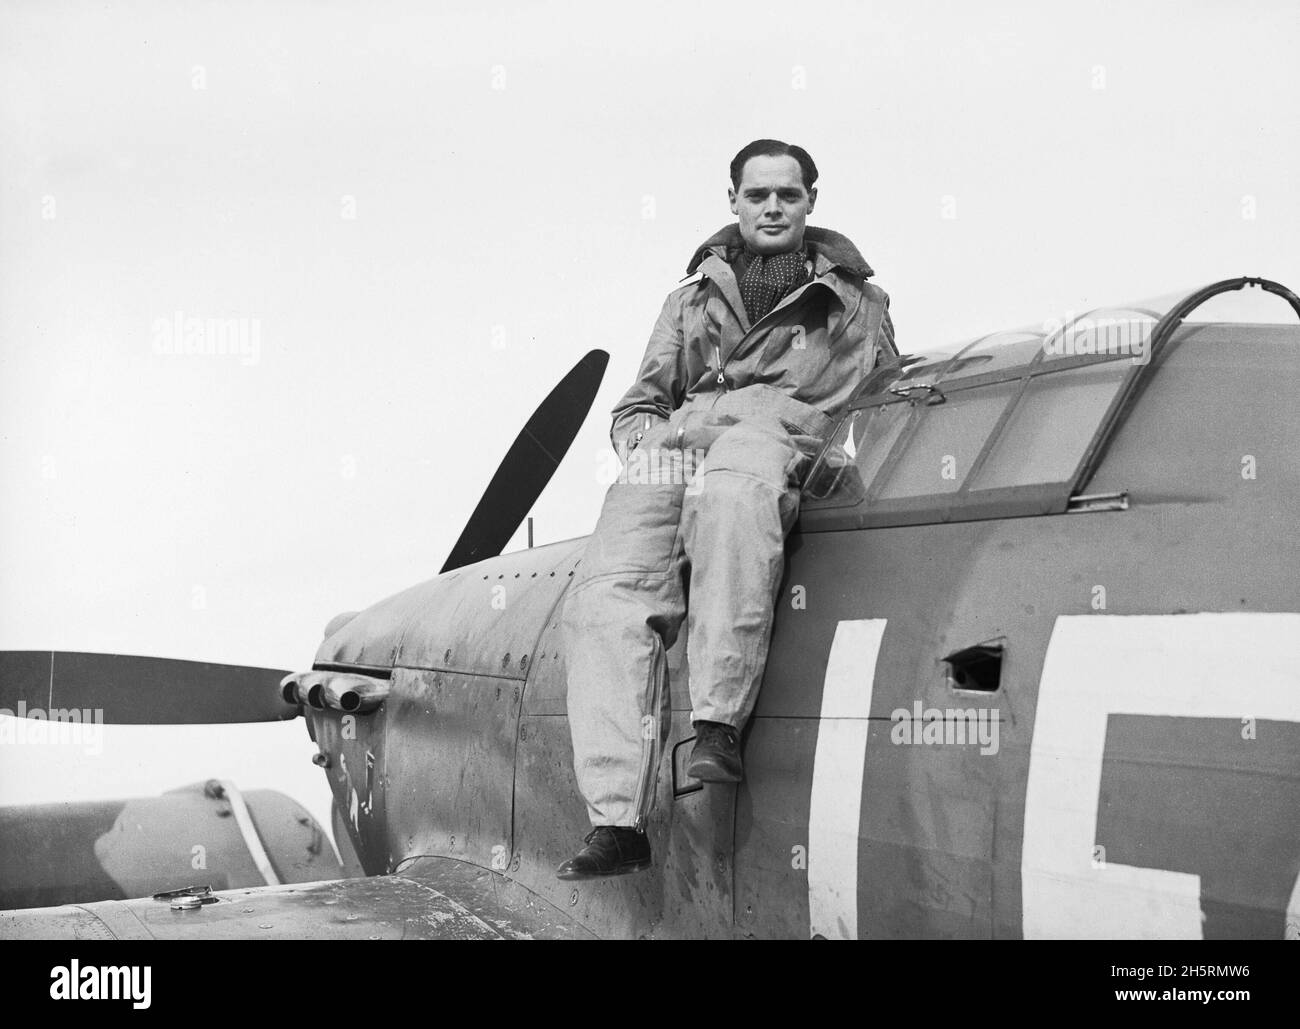 RAF DUXFORD, CAMBRIDGESHIRE, ANGLETERRE, Royaume-Uni - septembre 1940 - le chef de l'escadron de la RAF, Douglas Bader, commandant de l'escadron no 242, s'est assis sur son ouragan Hawker Banque D'Images